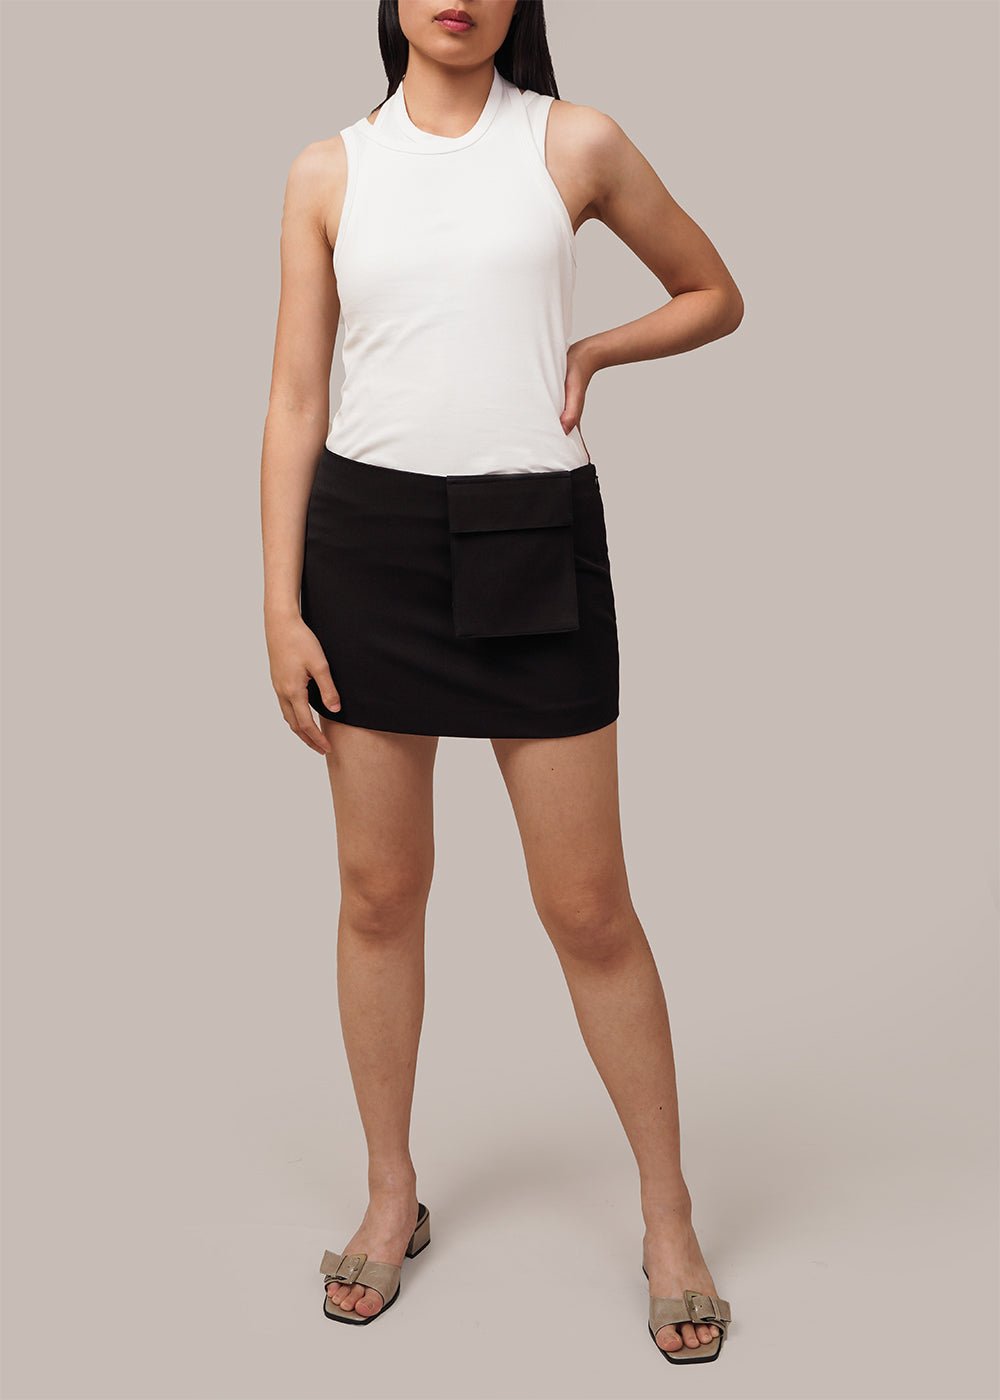 St. Agni Black Utilitarian Pocket Mini Skirt - New Classics Studios Sustainable Ethical Fashion Canada